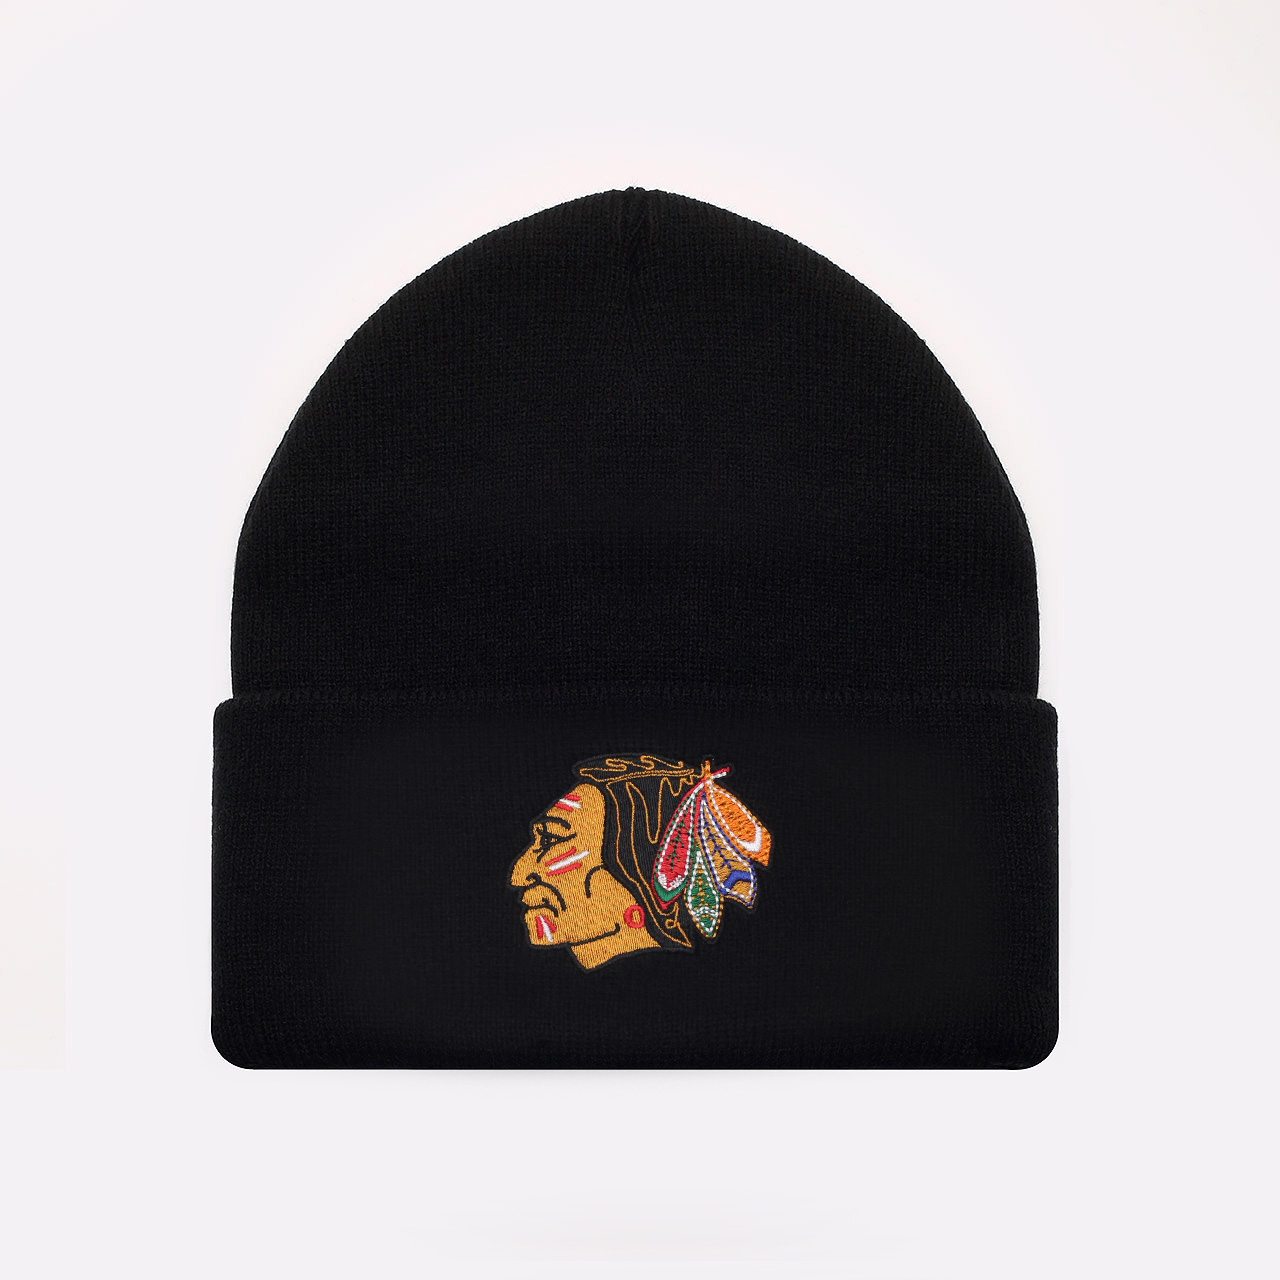  черная шапка Mitchell and ness Chicago Blackhawks EU785-BLACK CHICAGO - цена, описание, фото 1